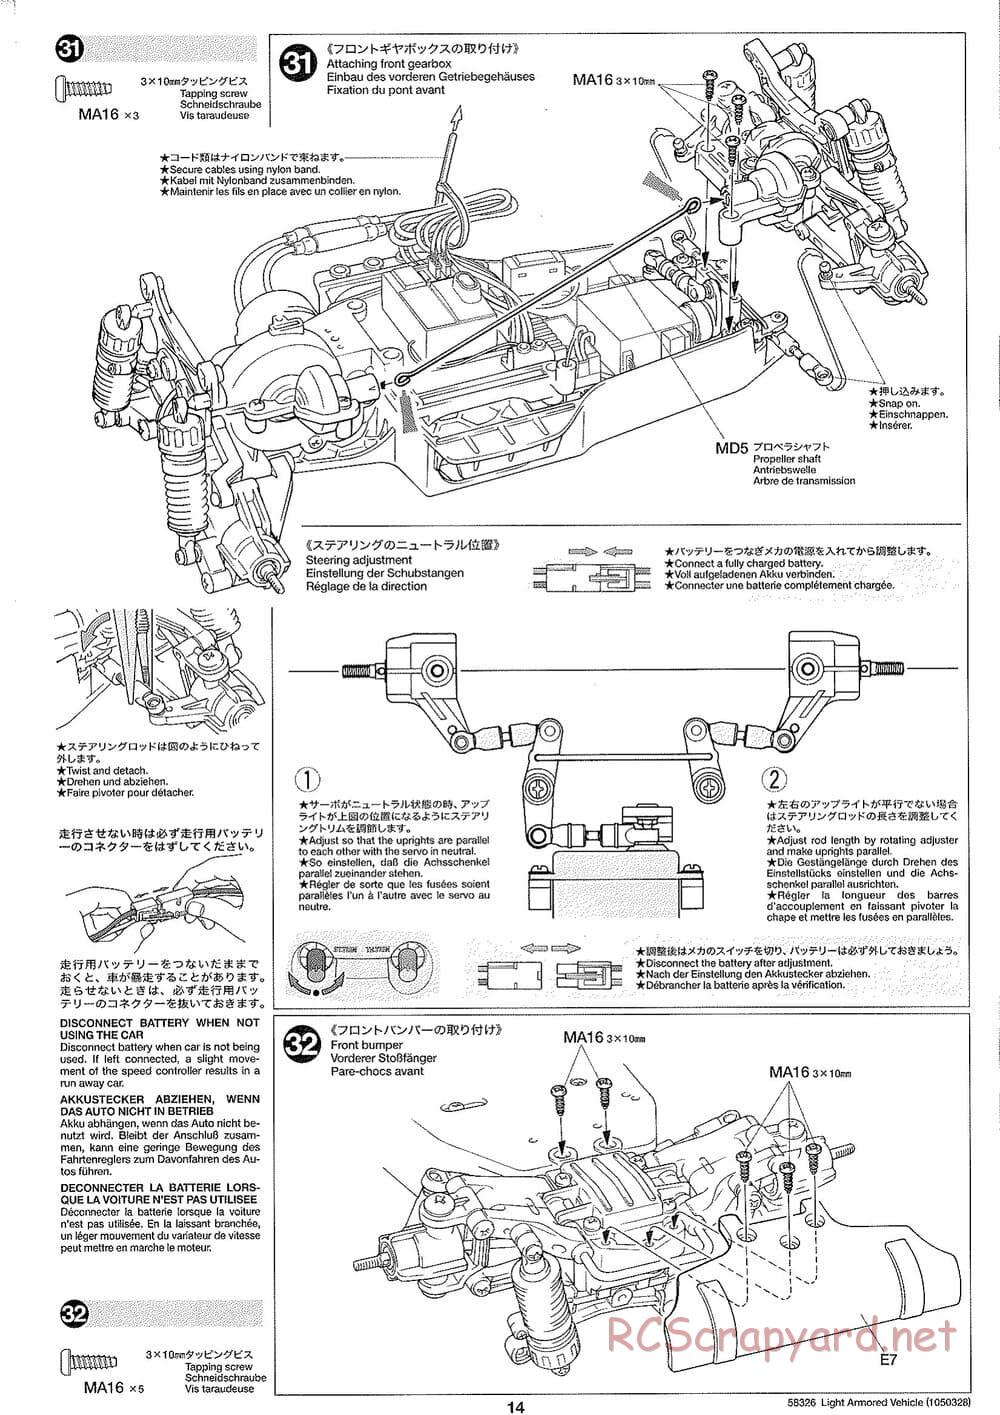 Tamiya - JGSDF Light Armored Vehicle - TA-01 Chassis - Manual - Page 14